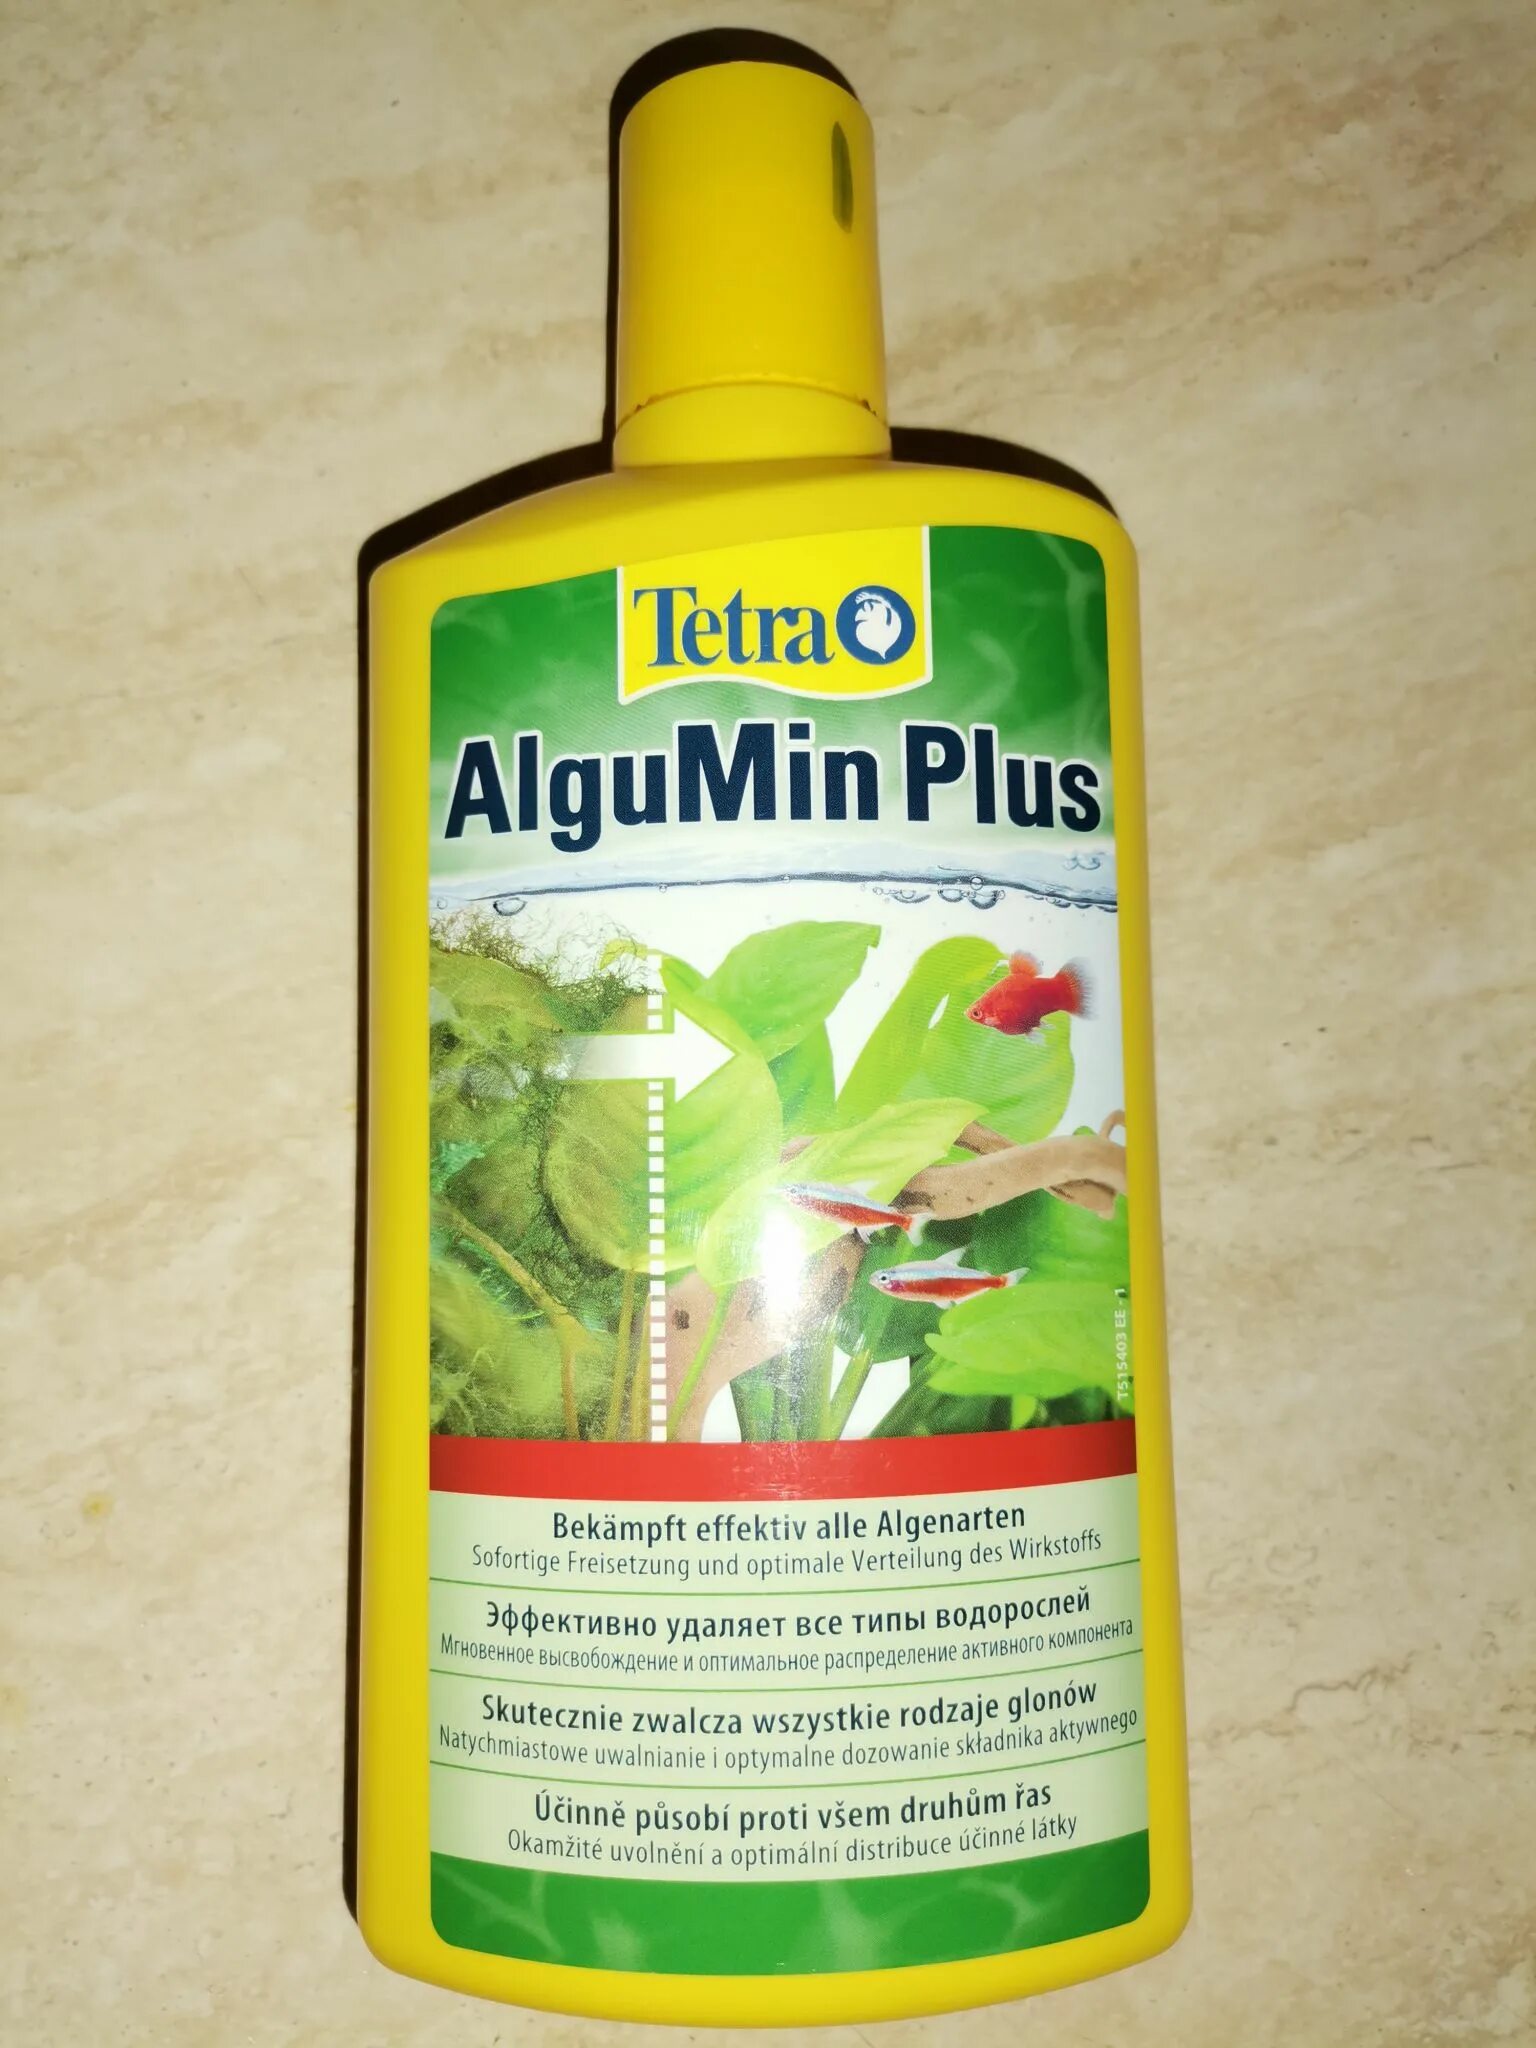 Тетра Альгумин. Tetra ALGUMIN средство для борьбы с водорослями. Tetra ALGUMIN Plus 250 мл х 2 шт. Алгумин плюс.